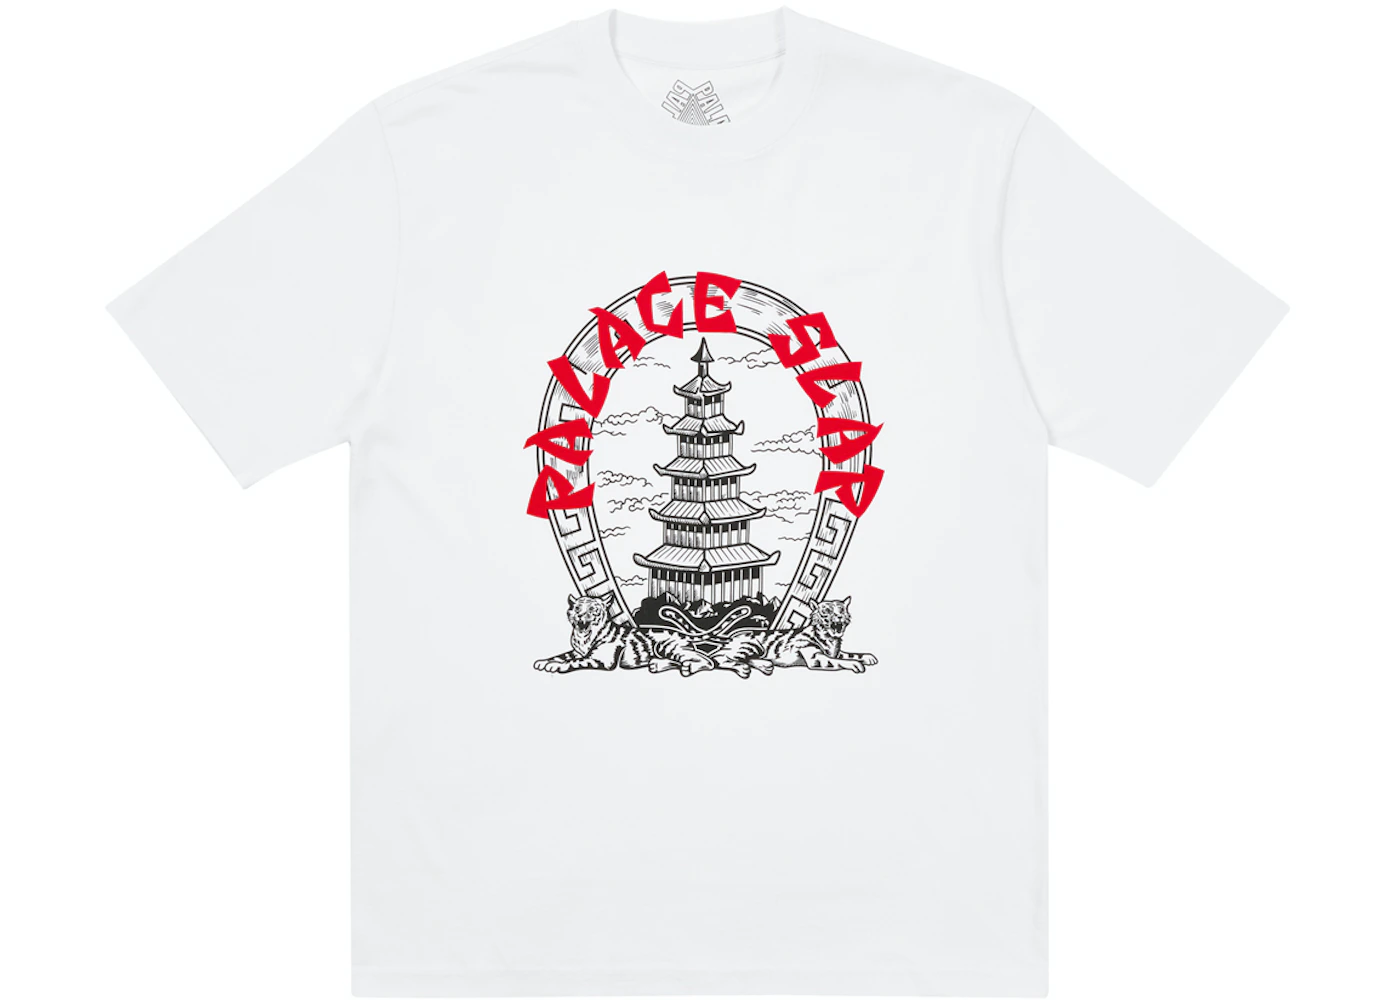 Pagoda shirt